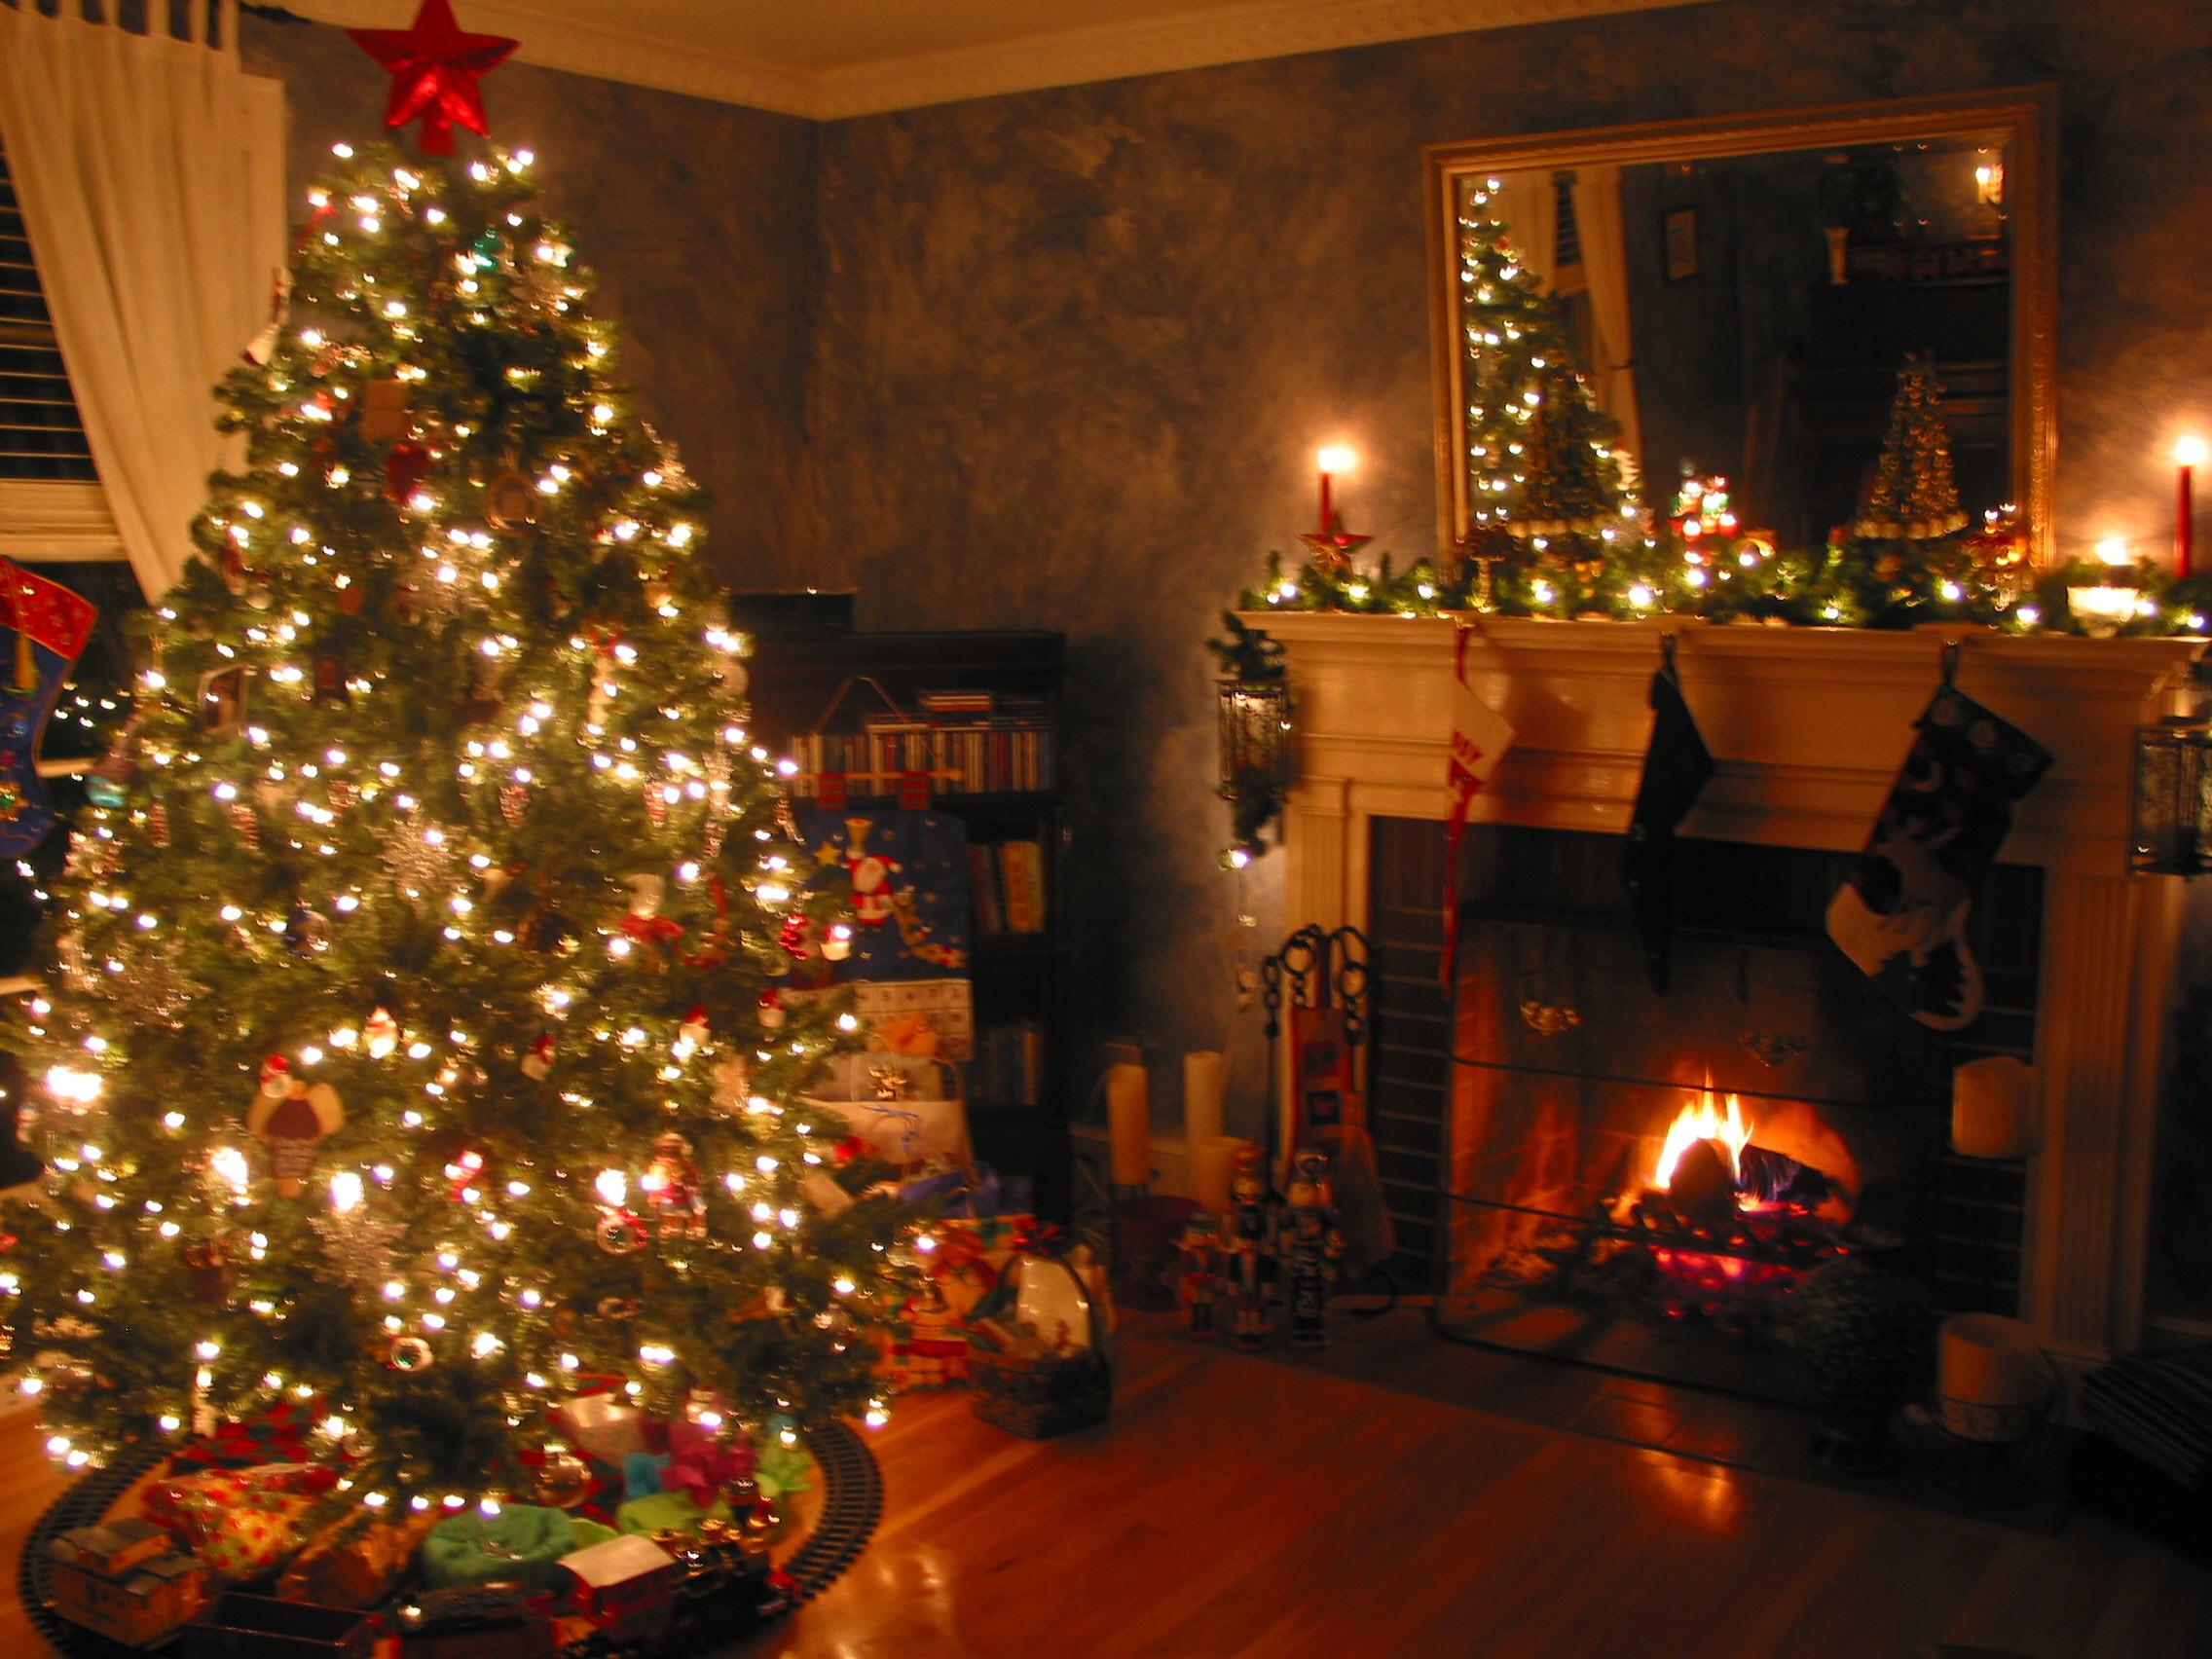 Christmas Fireplace Wallpaper